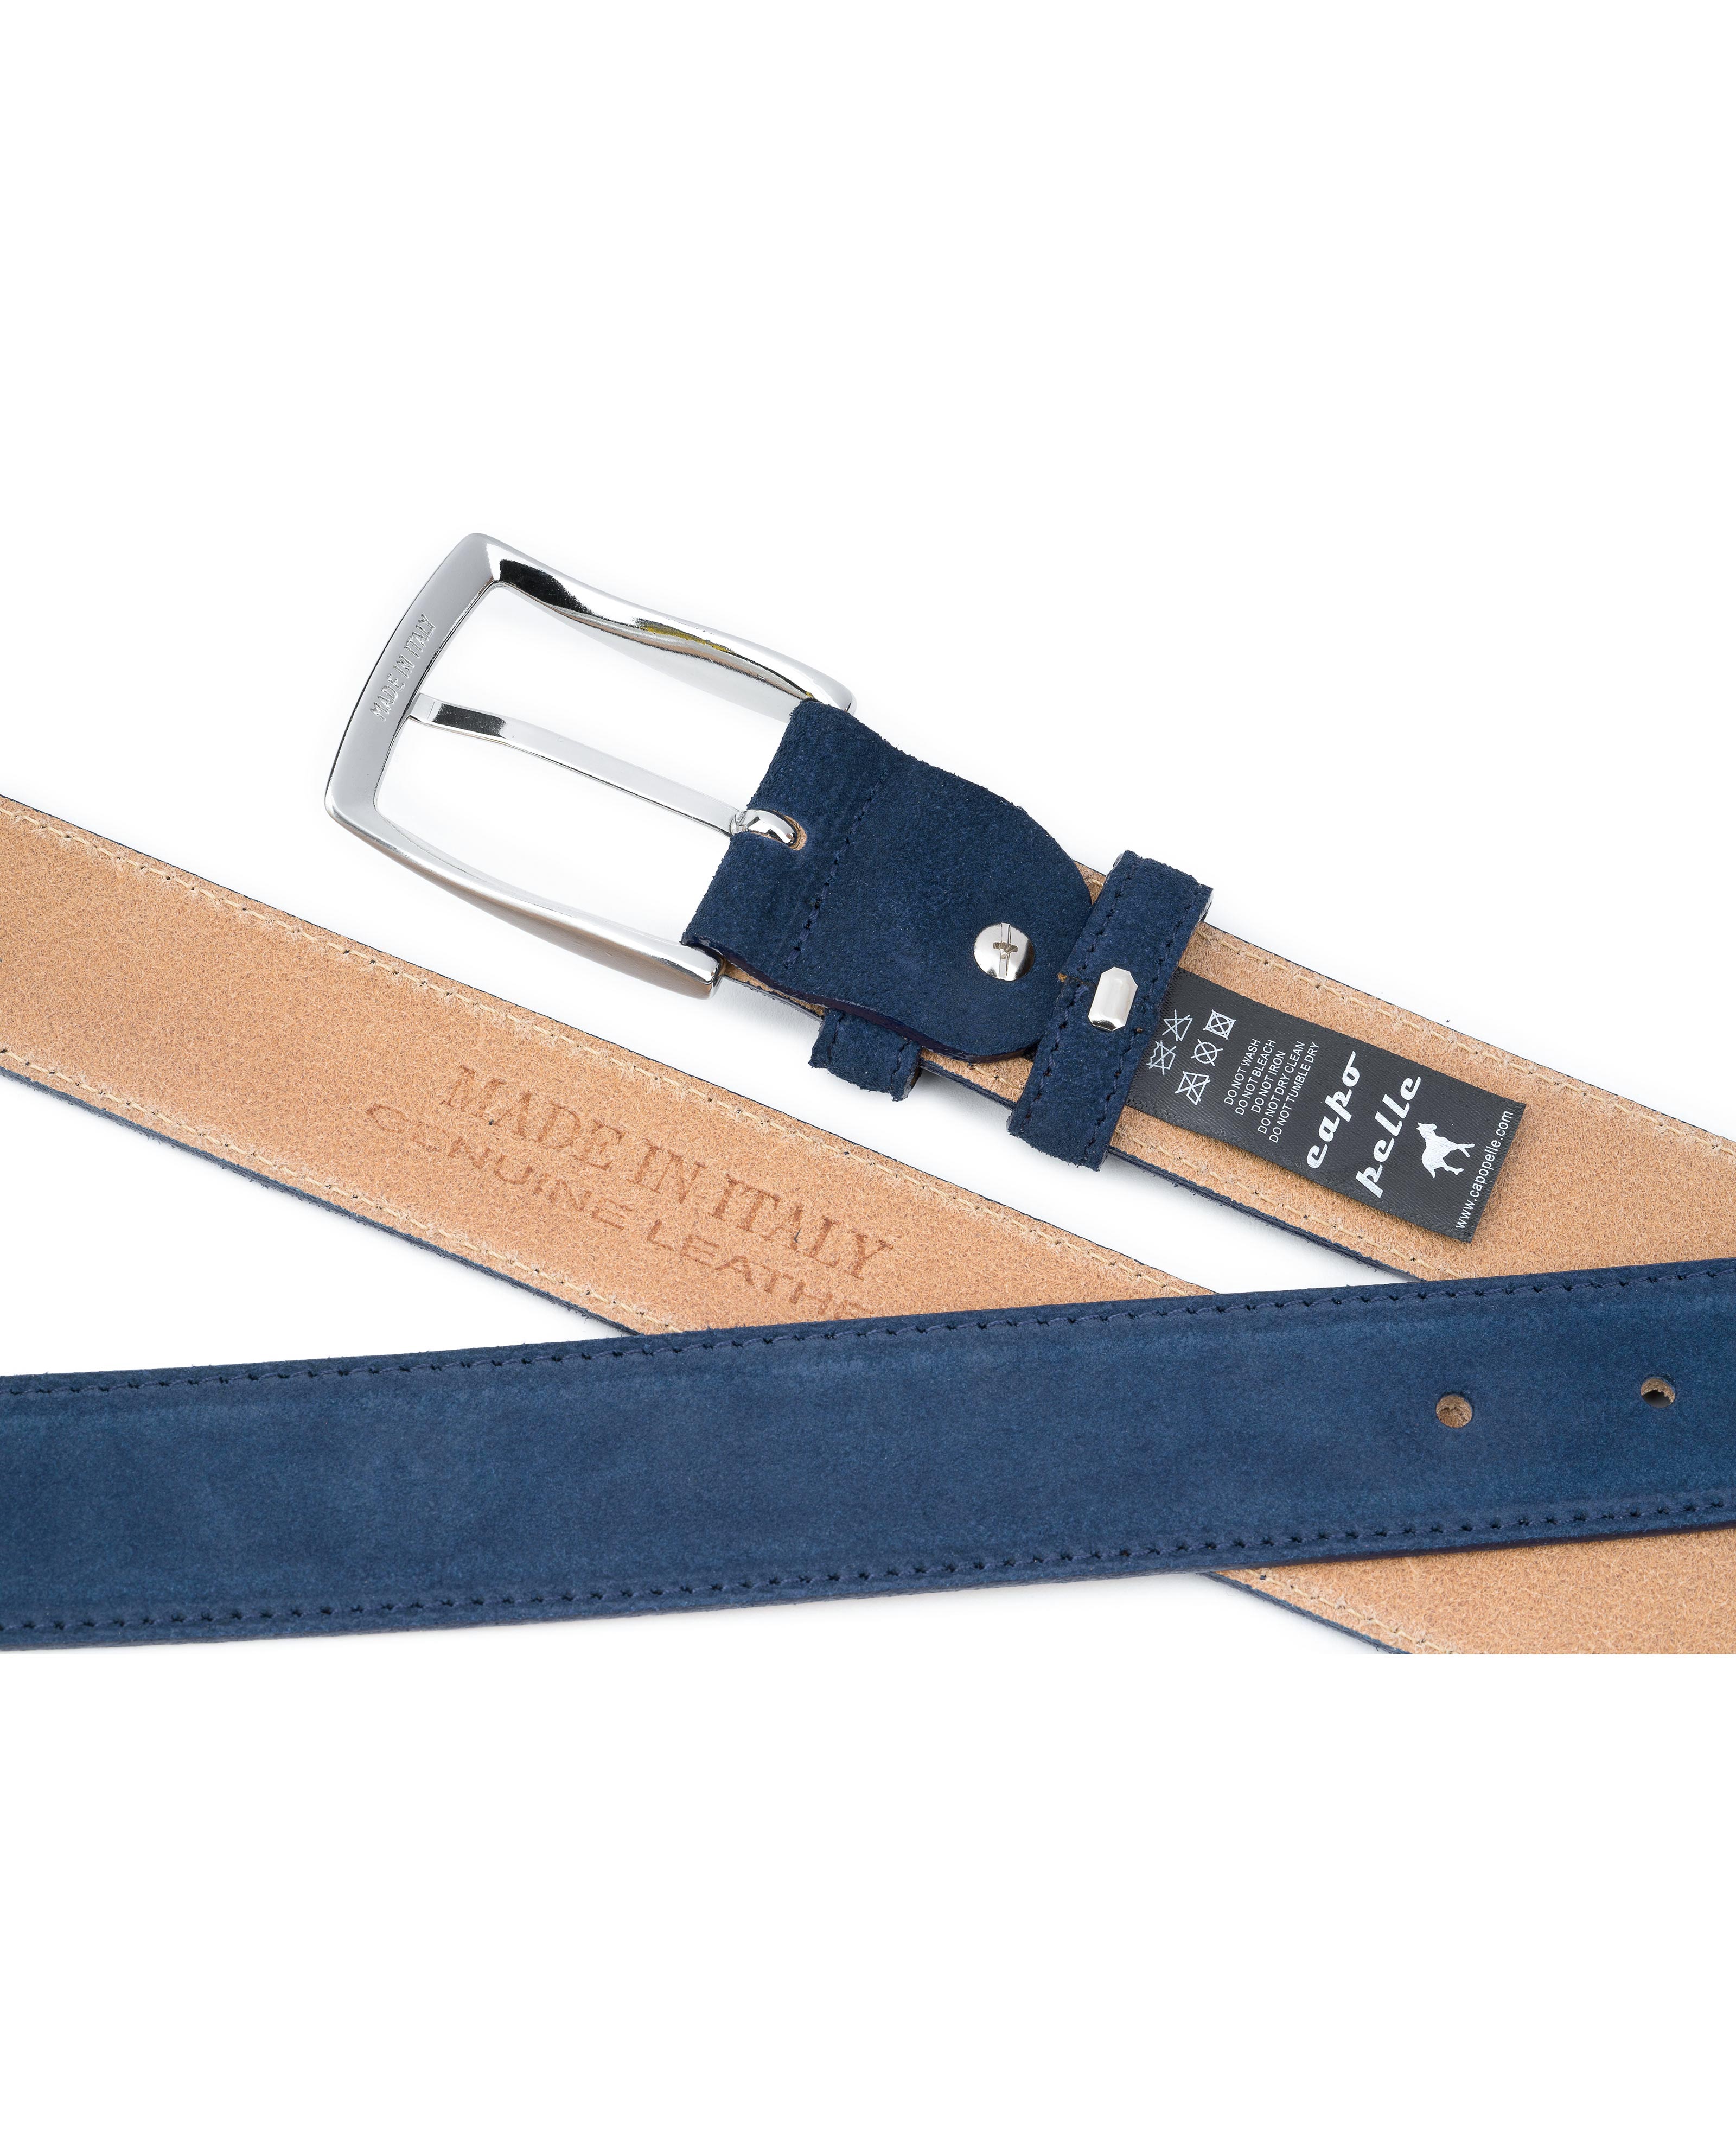 105cm New $295 SANTONI Distressed Washed Navy Blue Suede Leather Belt 42 